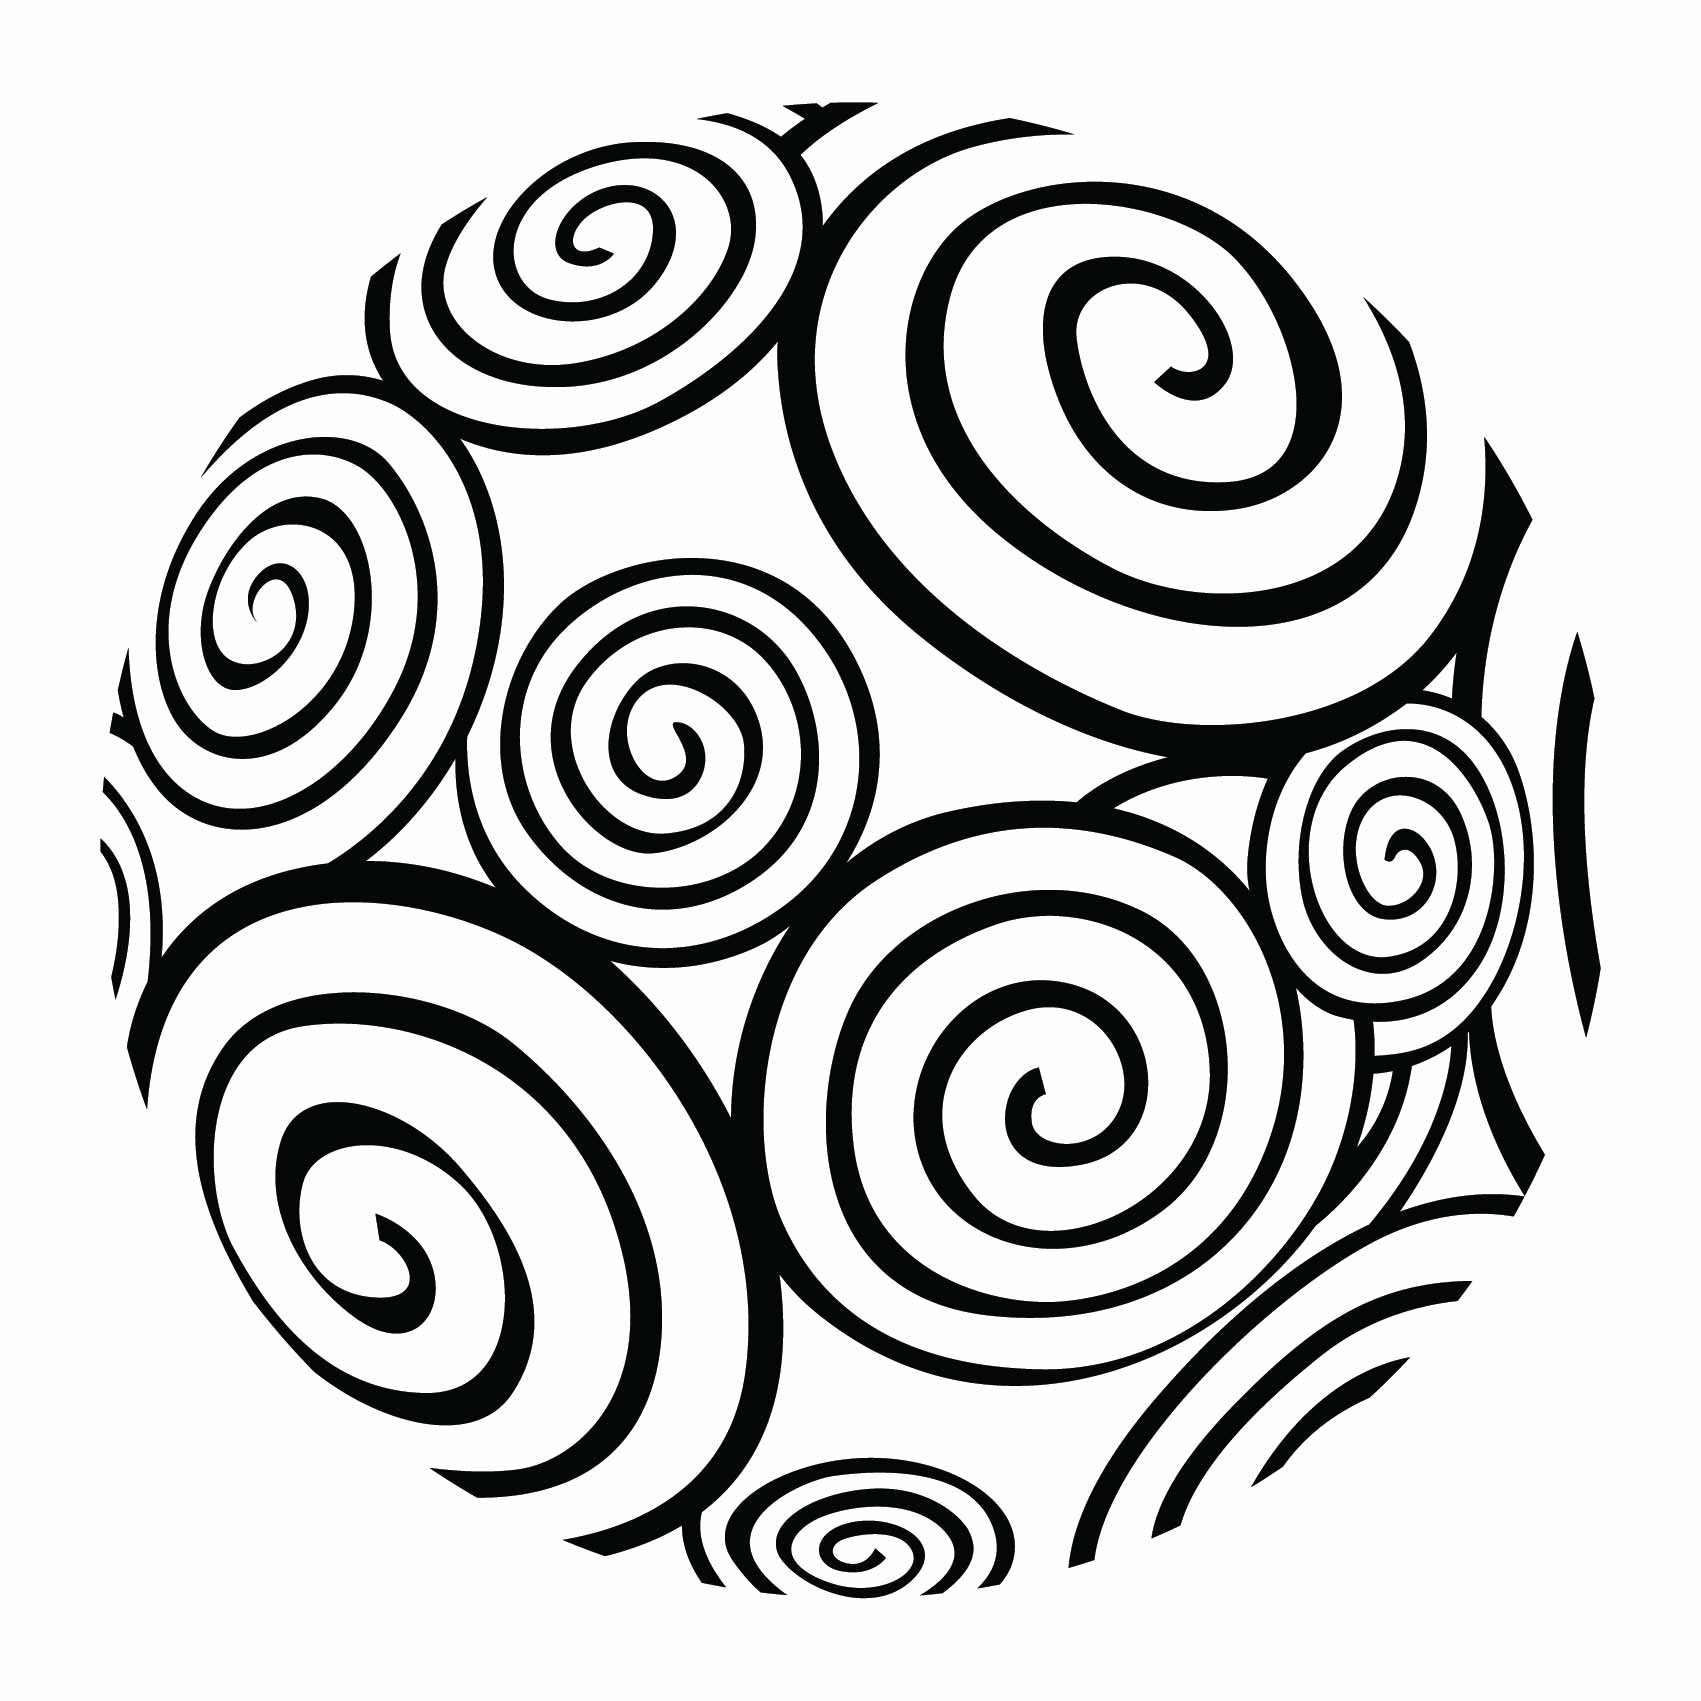 stickers-rond-spirales-ref16abstrait-stickers-muraux-motif-autocollant-deco-chambre-salon-cuisine-sticker-abstrait-(2)